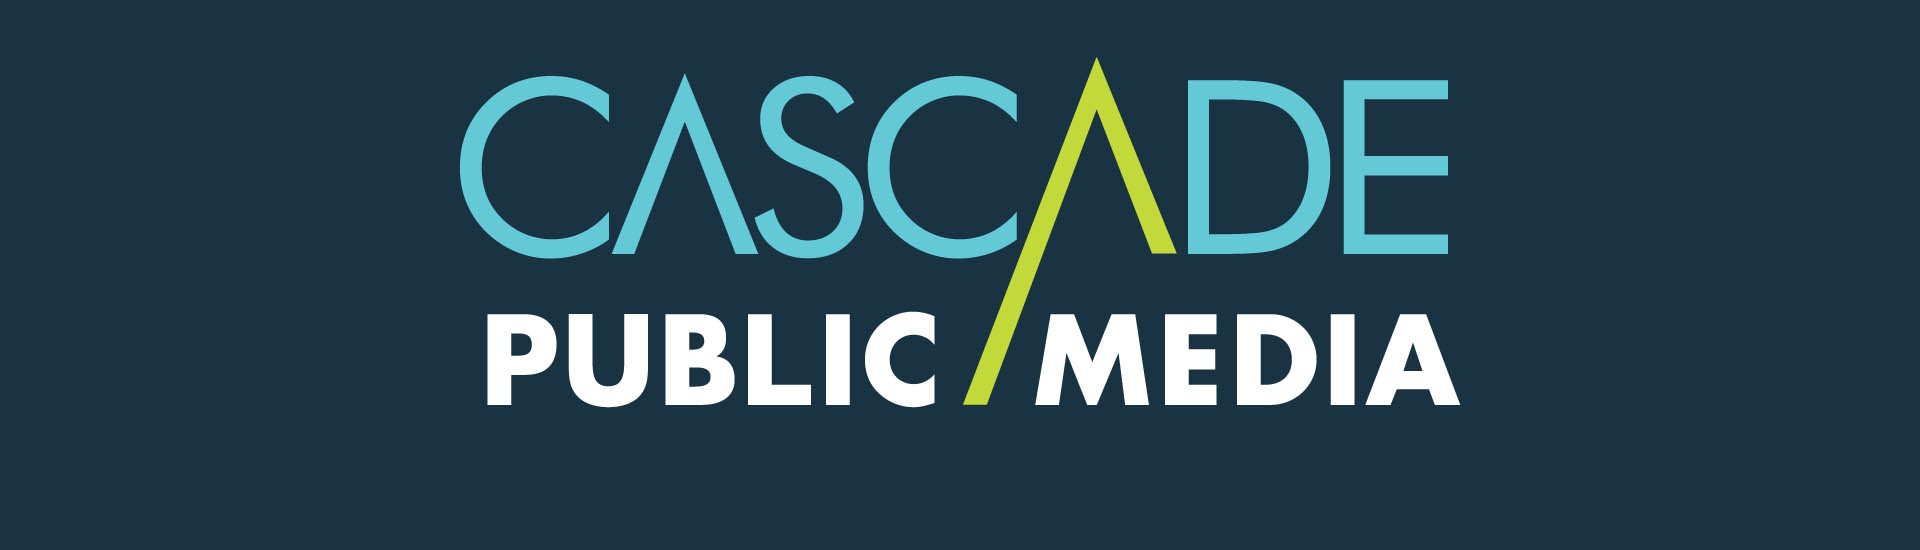 Cascade Public Media